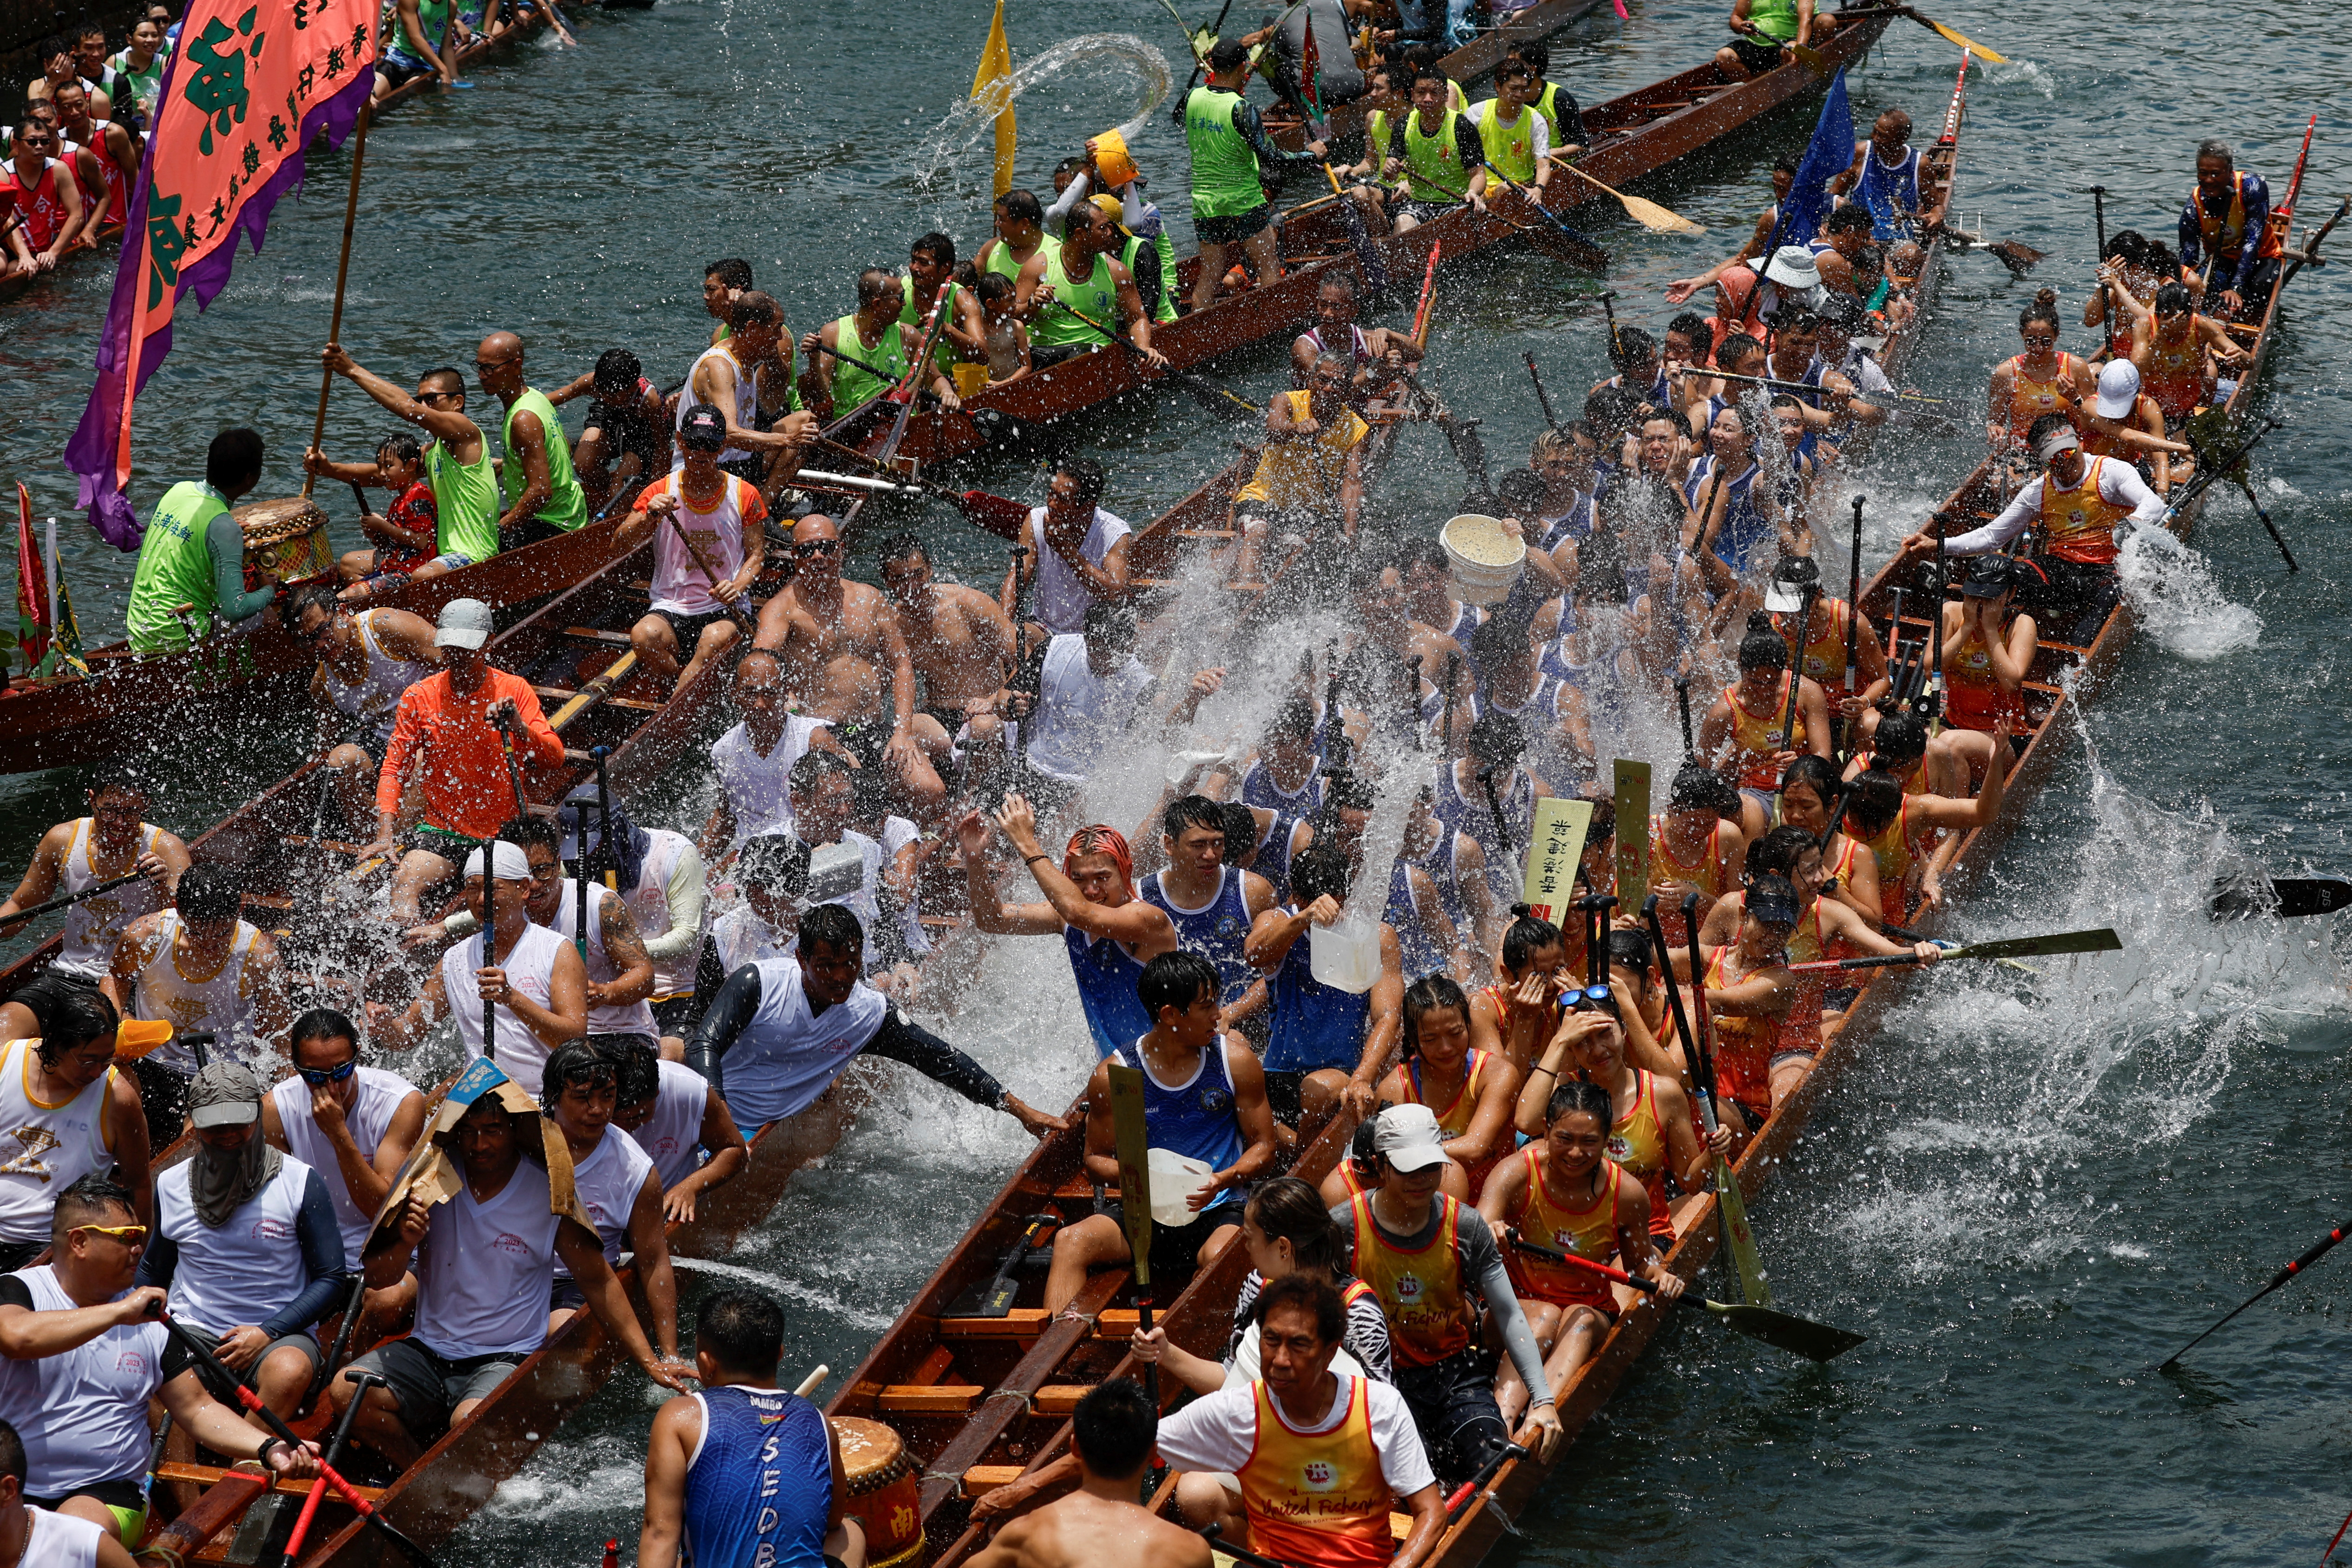 Annual Tung Ng or Dragon Boat Festival at Aberdeen fishing port in Hong Kong